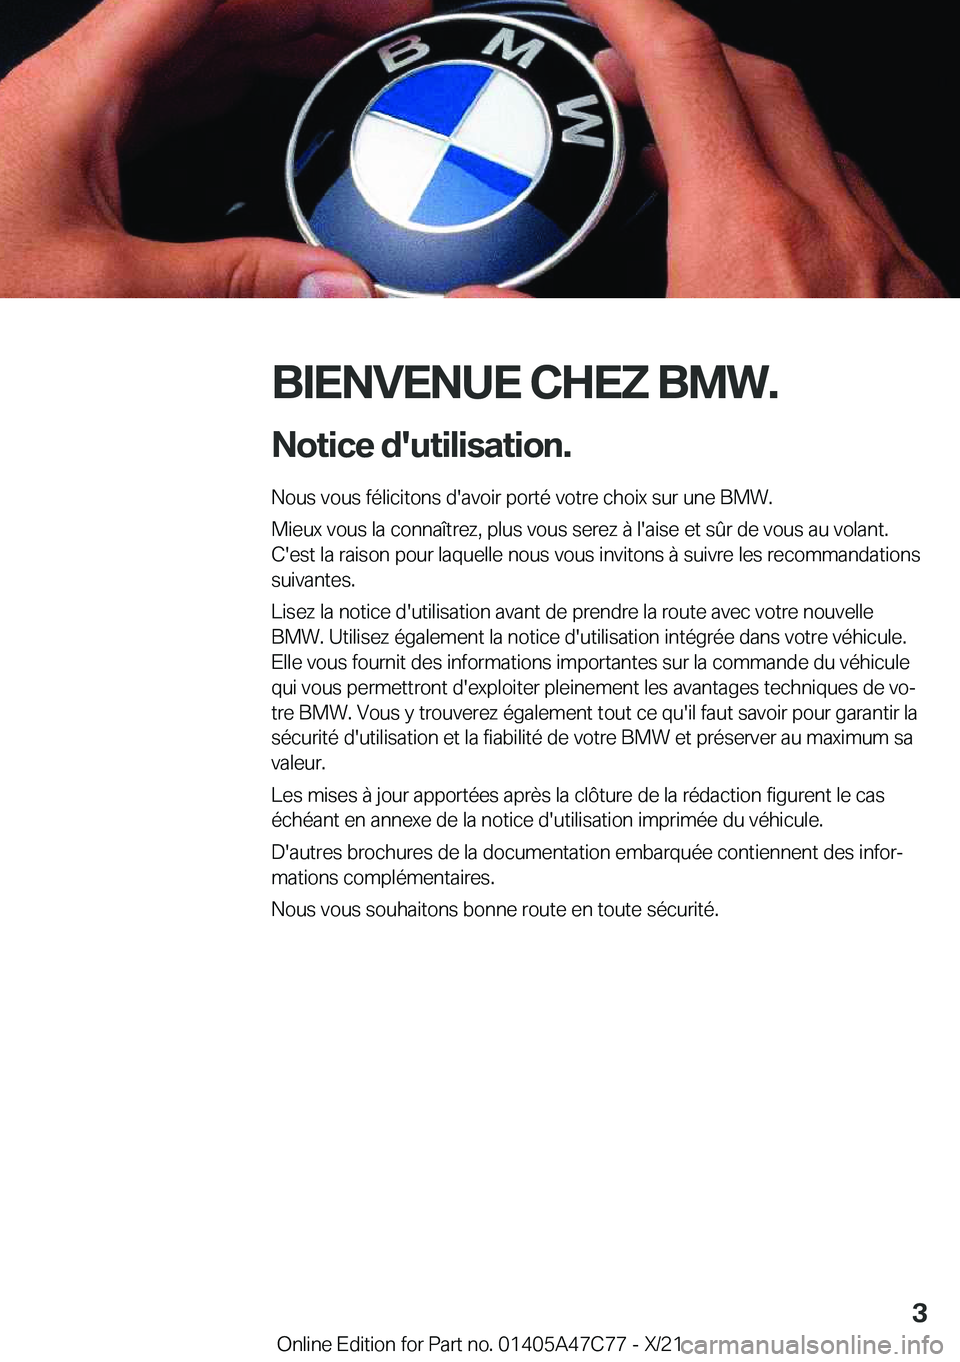 BMW X2 2022  Notices Demploi (in French) �B�I�E�N�V�E�N�U�E��C�H�E�Z��B�M�W�.�N�o�t�i�c�e��d�'�u�t�i�l�i�s�a�t�i�o�n�.
�N�o�u�s��v�o�u�s��f�é�l�i�c�i�t�o�n�s��d�'�a�v�o�i�r��p�o�r�t�é��v�o�t�r�e��c�h�o�i�x��s�u�r��u�n�e�